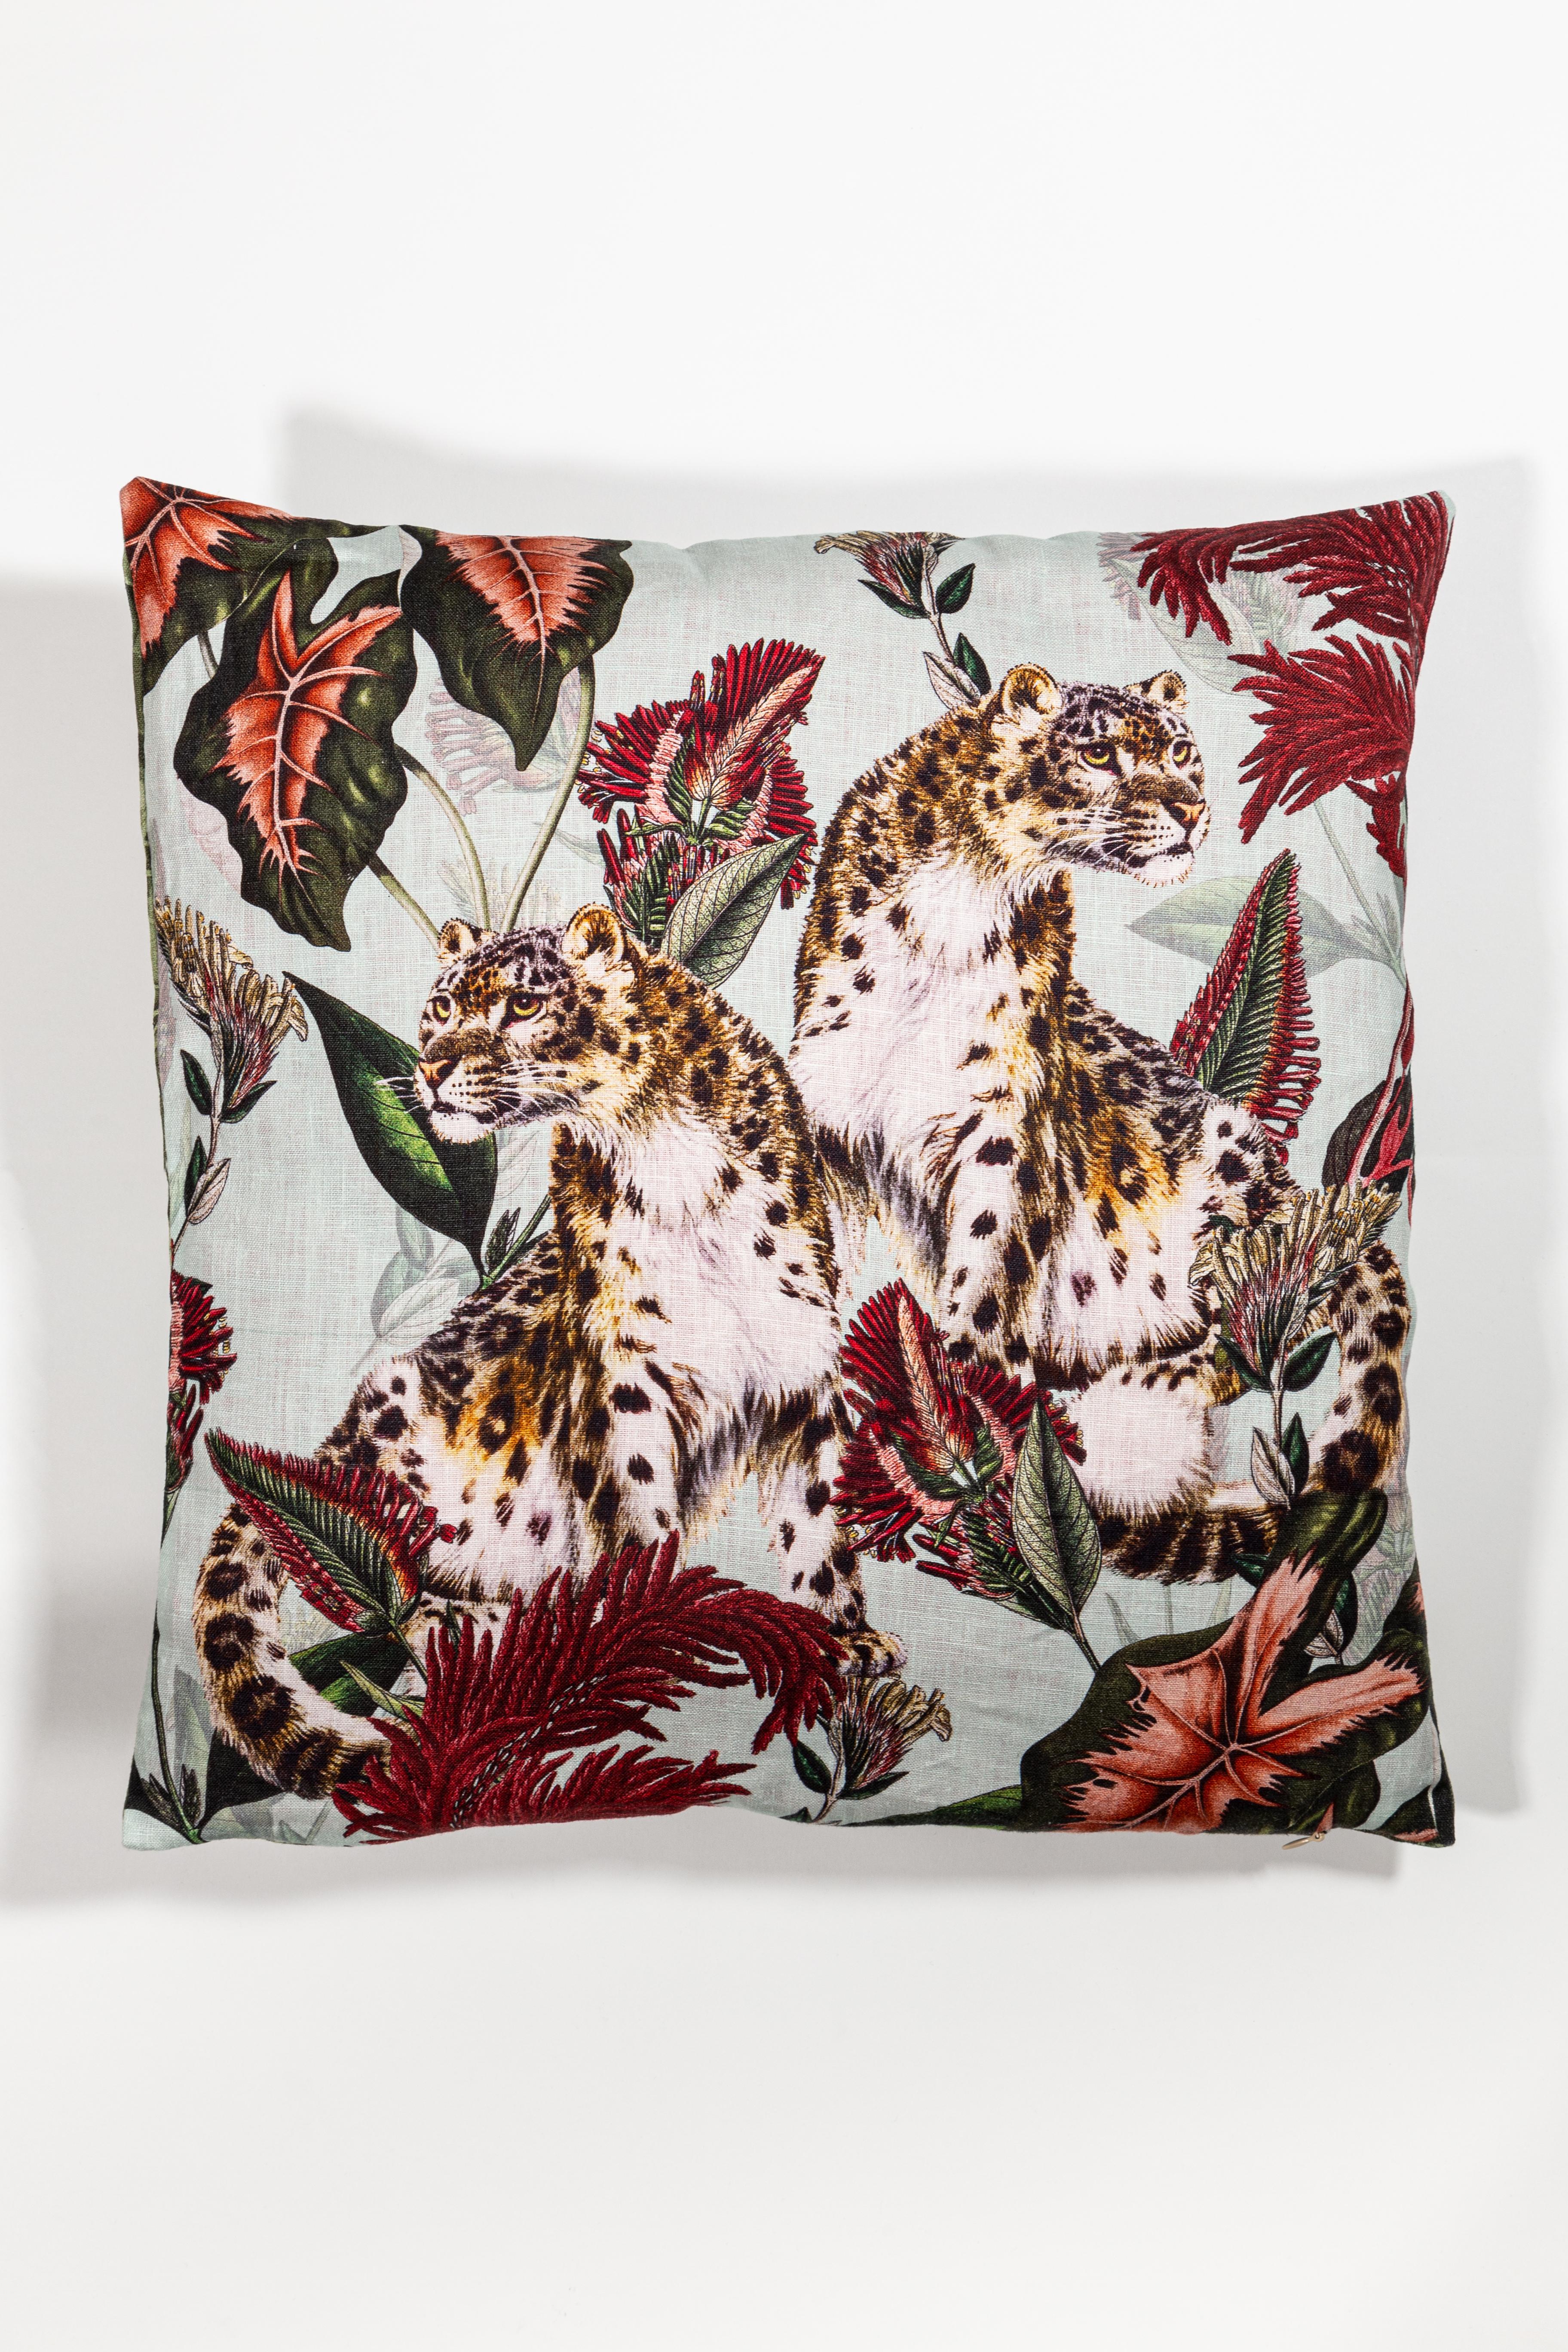 Animalia, Parrots, Contemporary Linen Printed Pillow by Vito Nesta For Sale 2